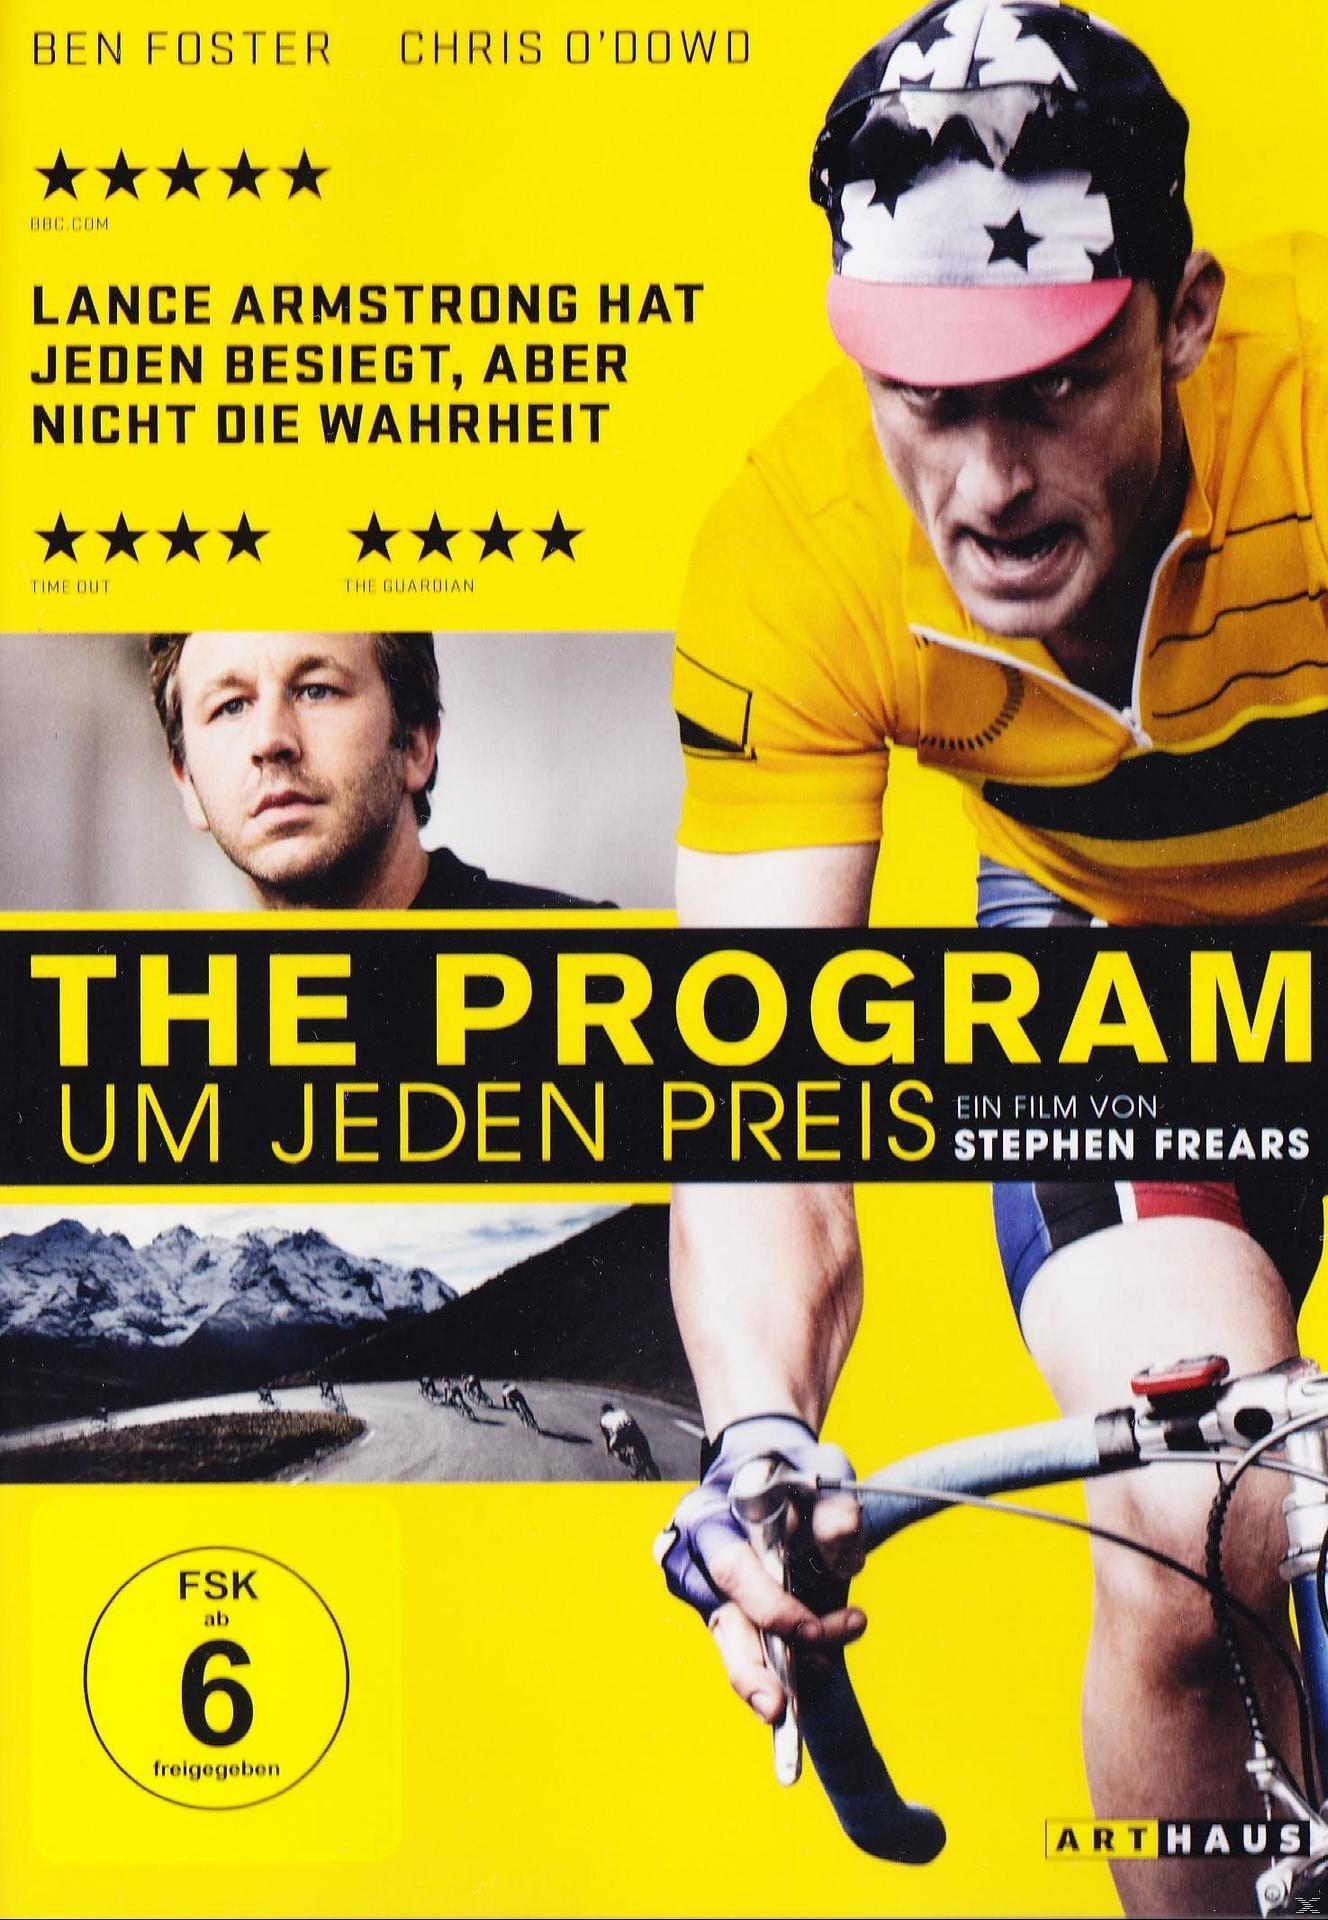 DVD jeden - The Um Program Preis